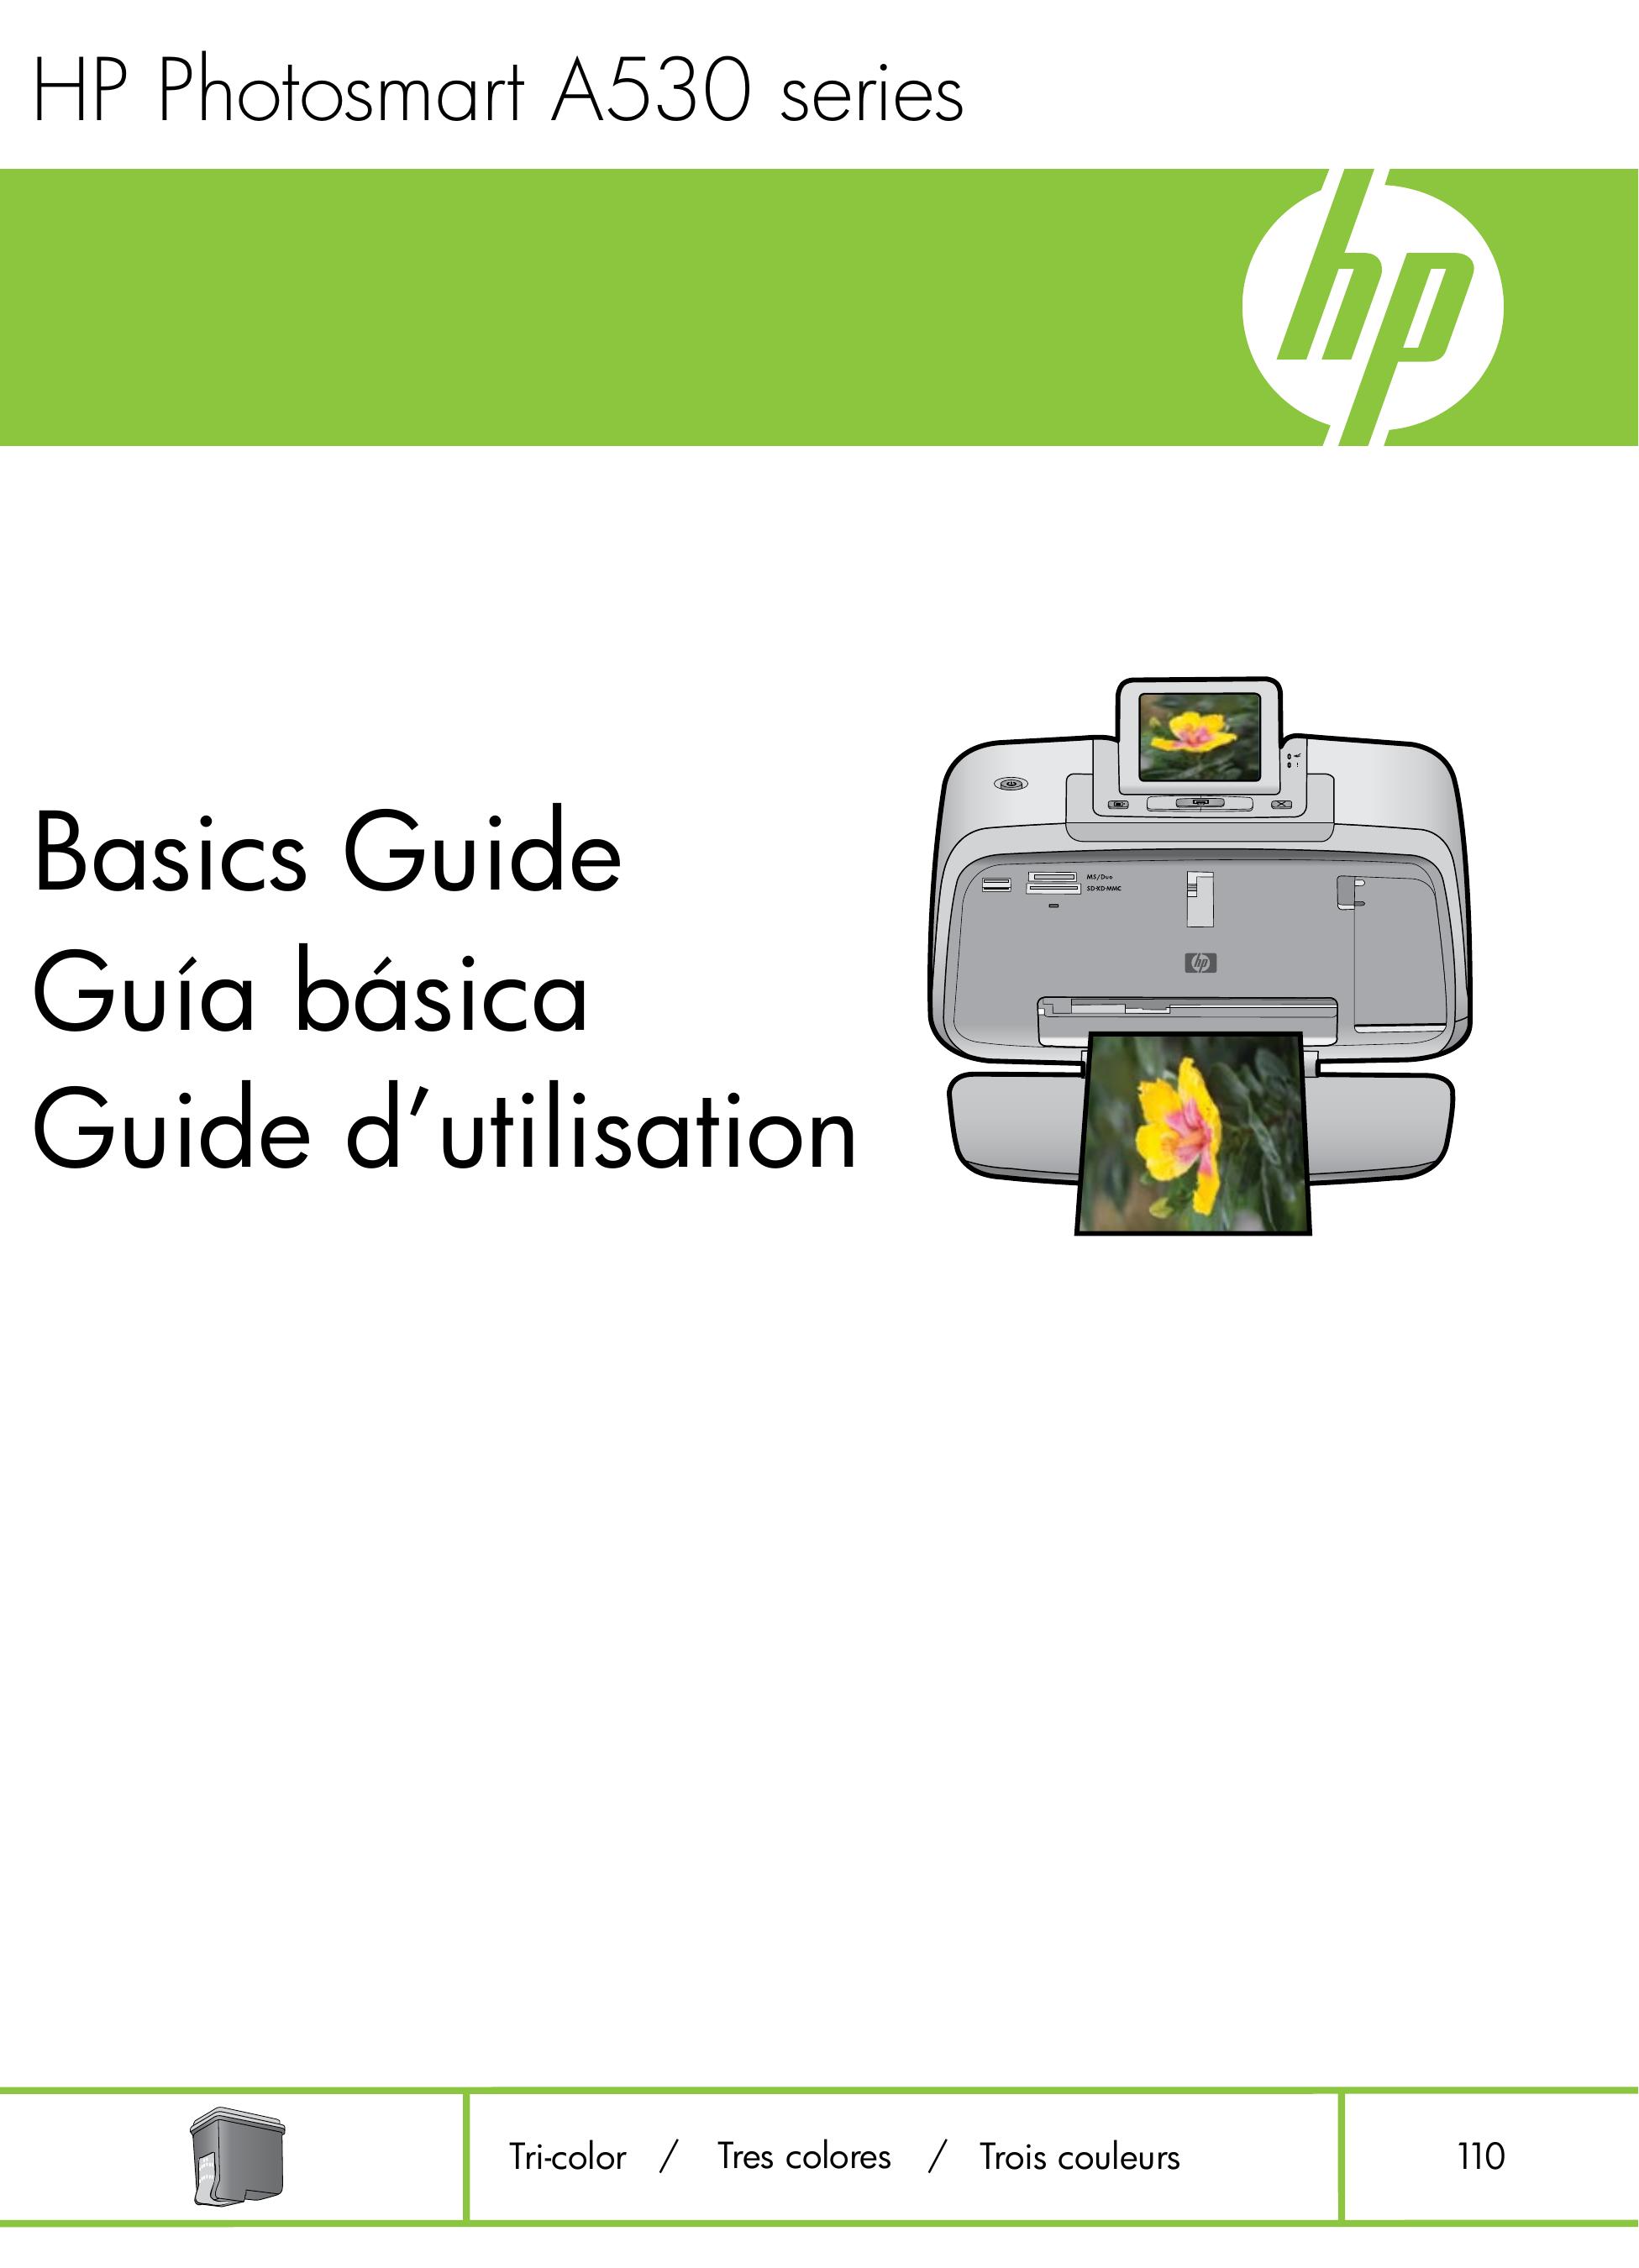 HP (Hewlett-Packard) A530 Series Photo Printer User Manual